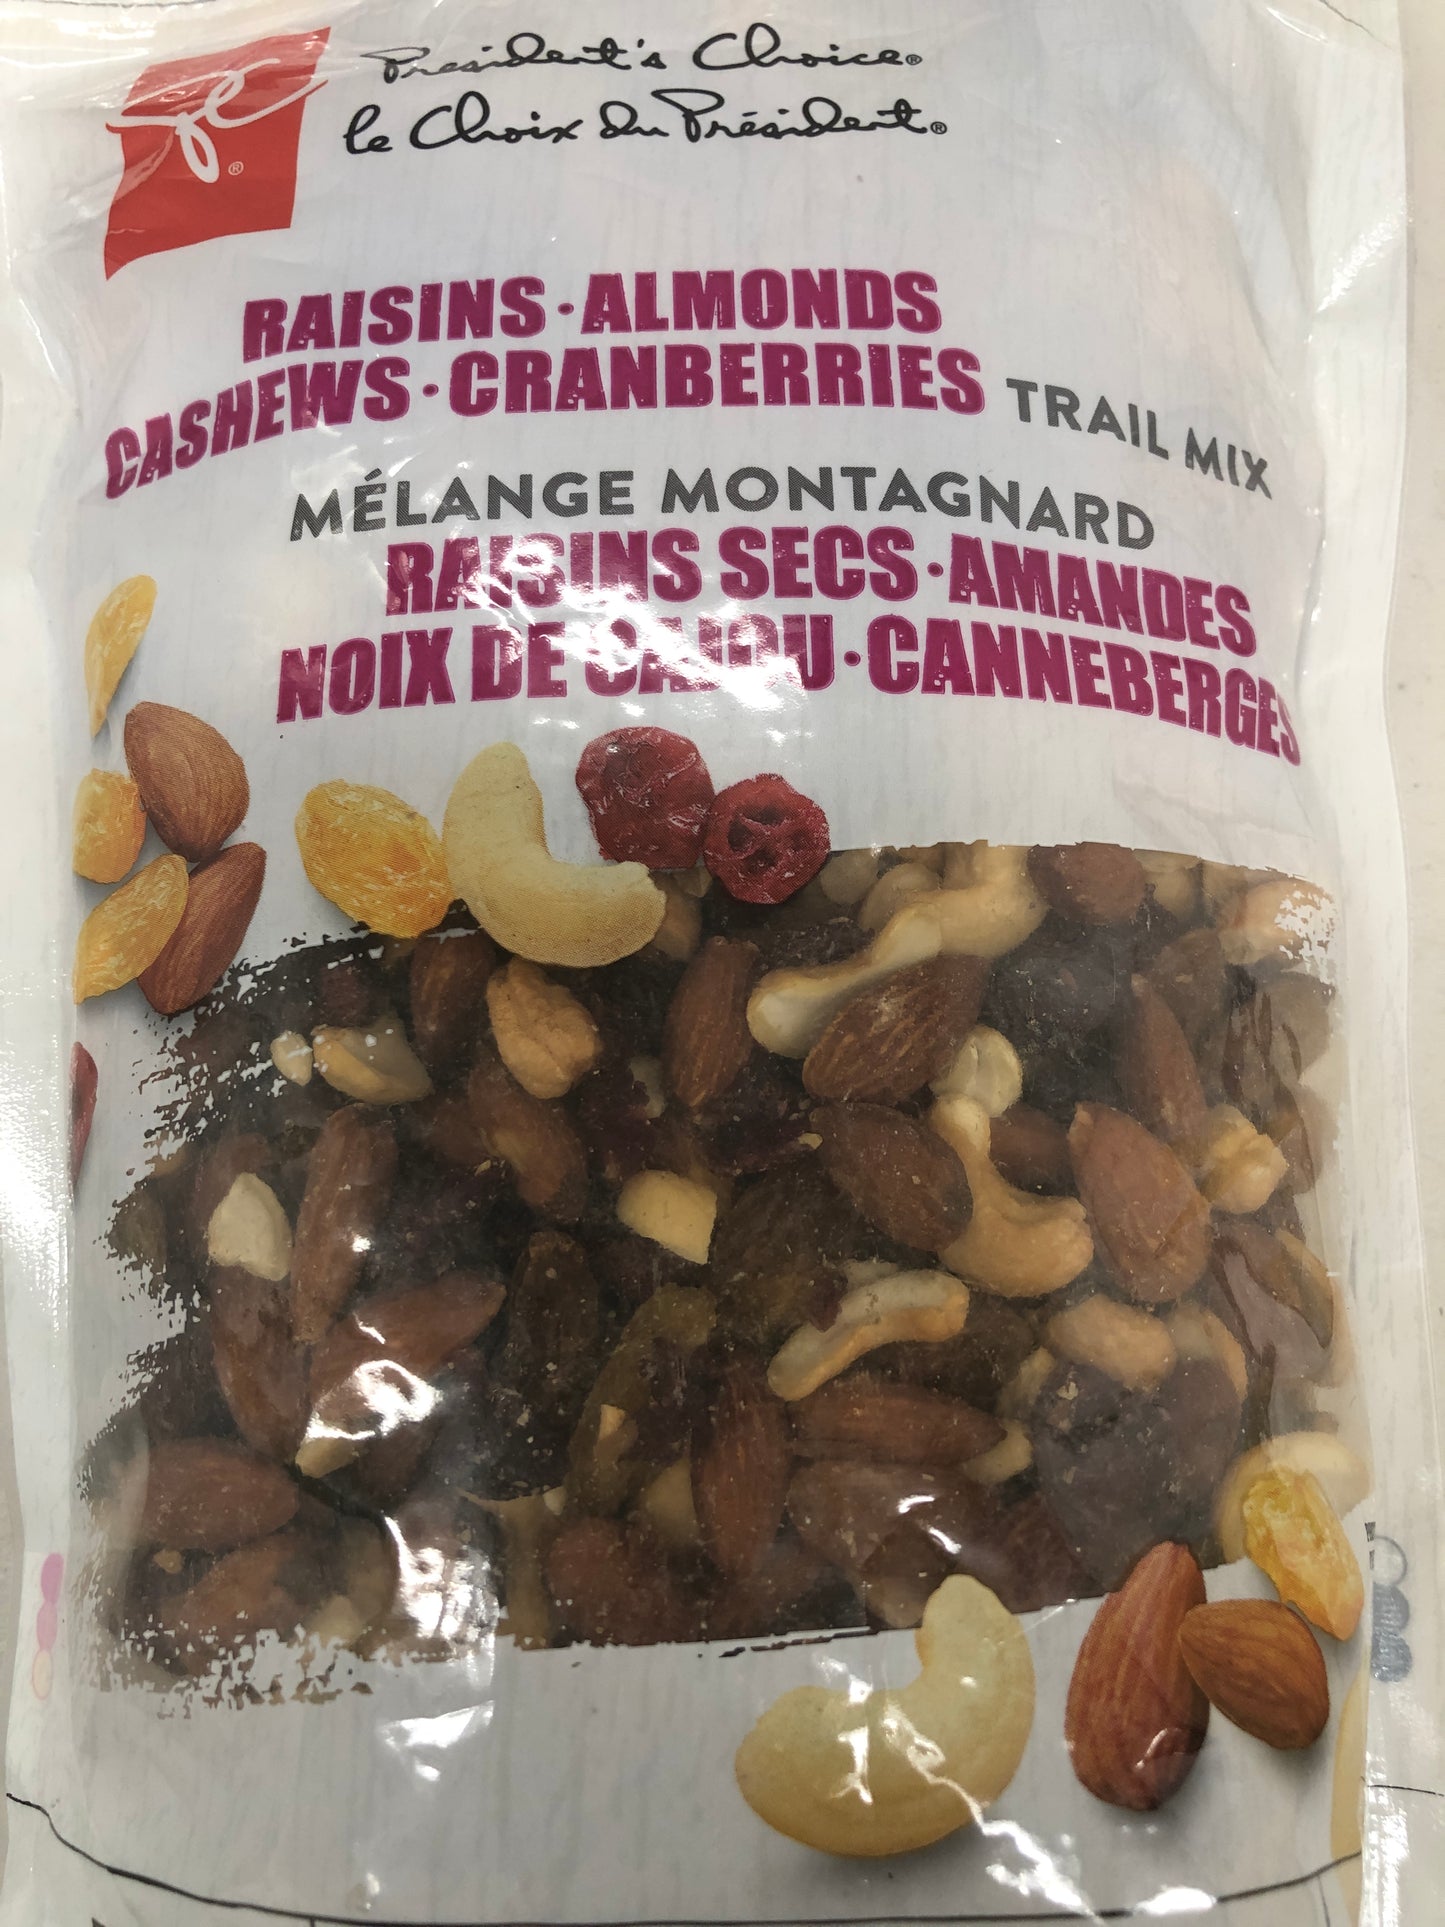 Trail mix Raisin almond cashew cranberries